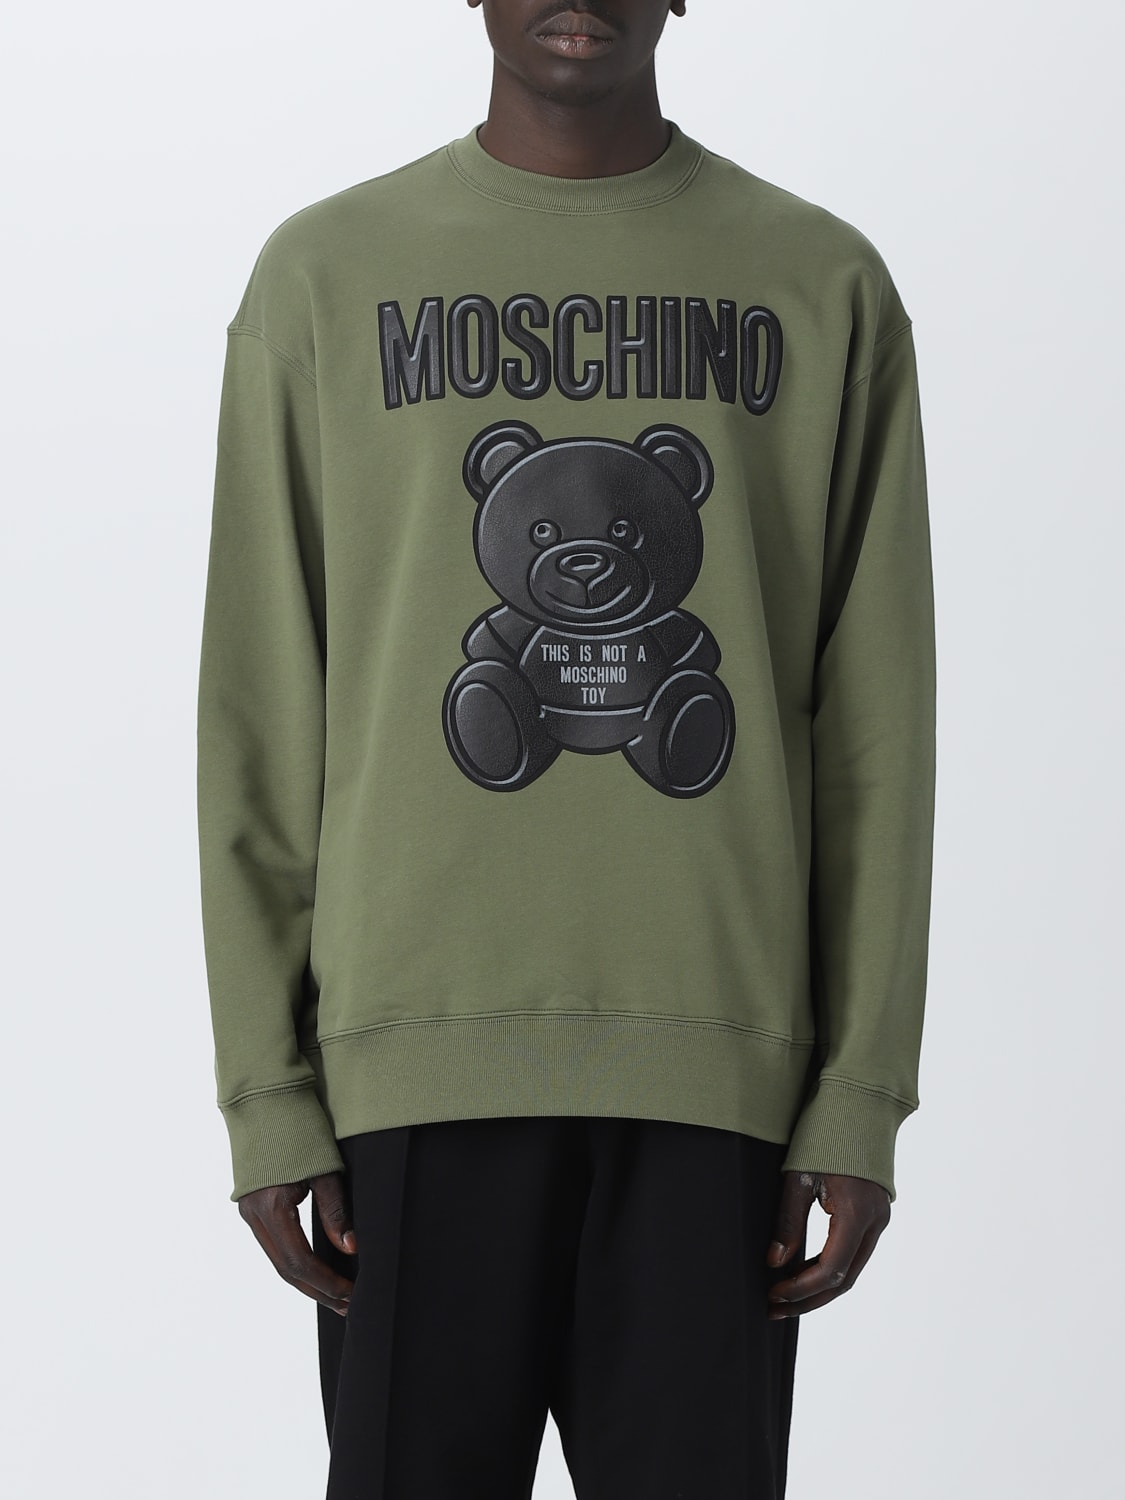 Teddy bear couture sweatshirt